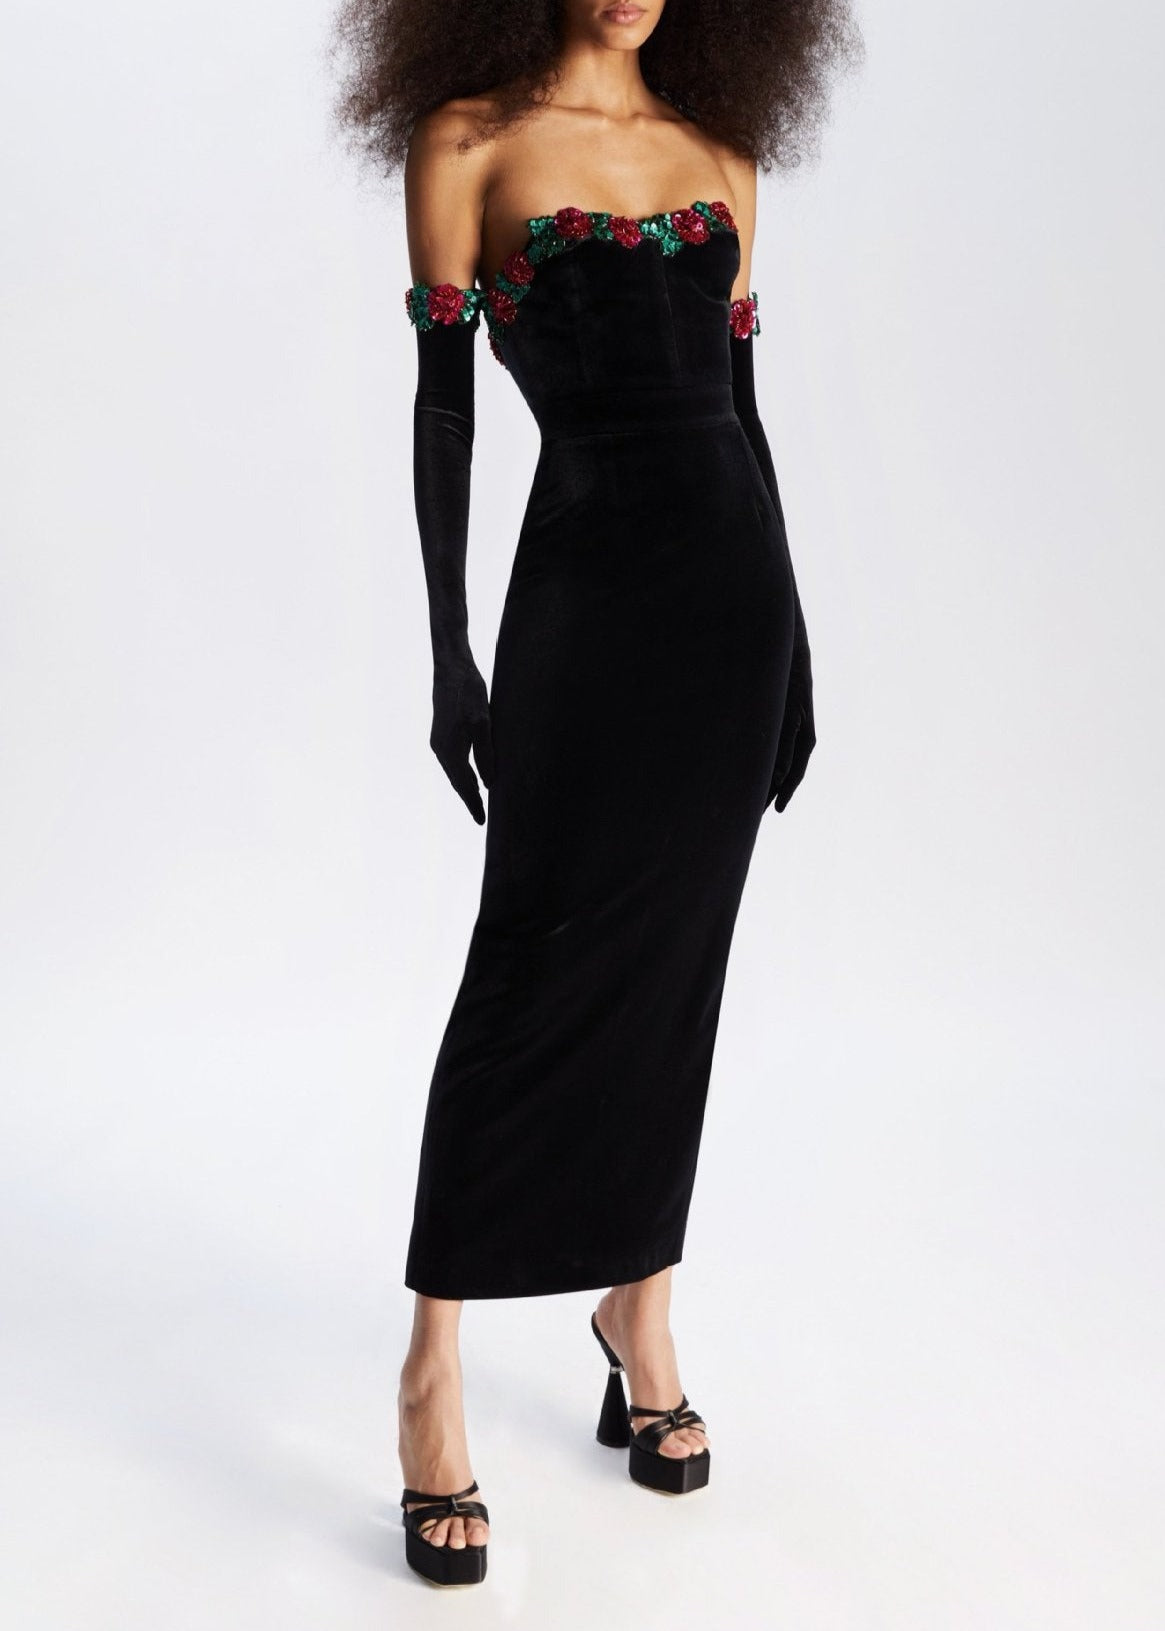 Janie Off Shoulder Flower Velvet Dress - Hot fashionista